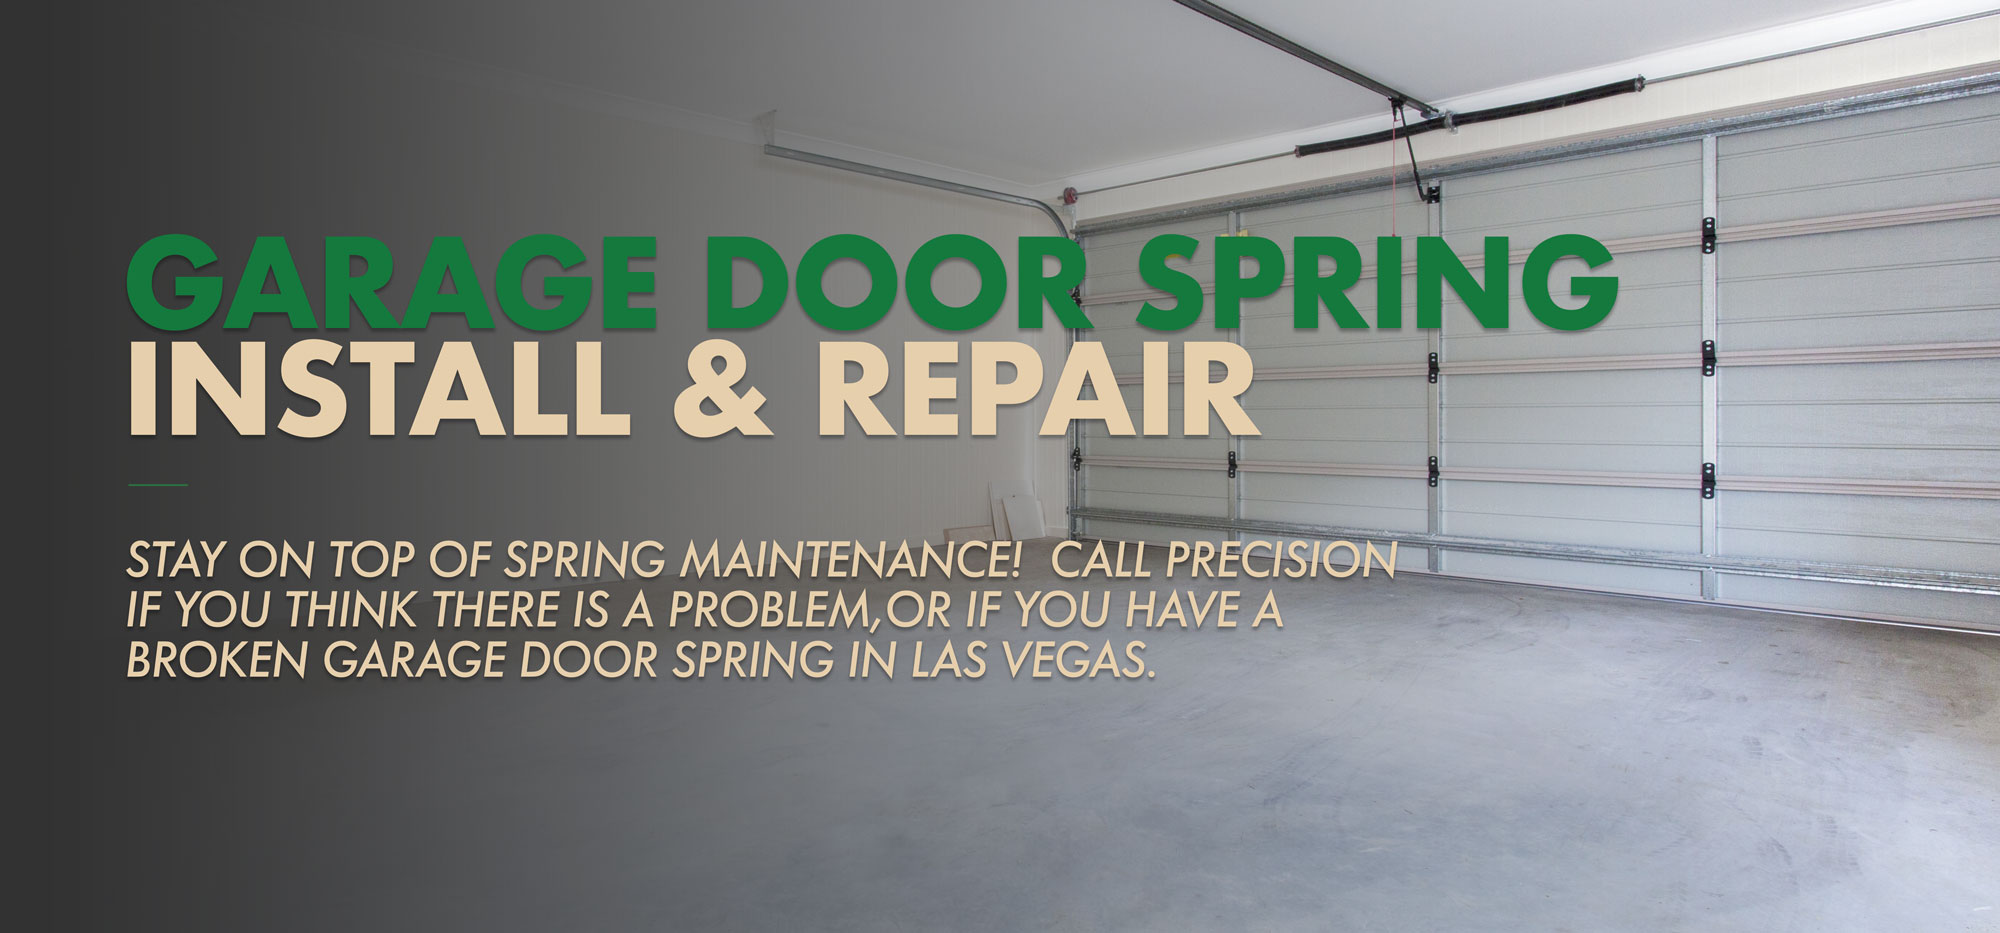 Garage Door Spring Replacement And Repair